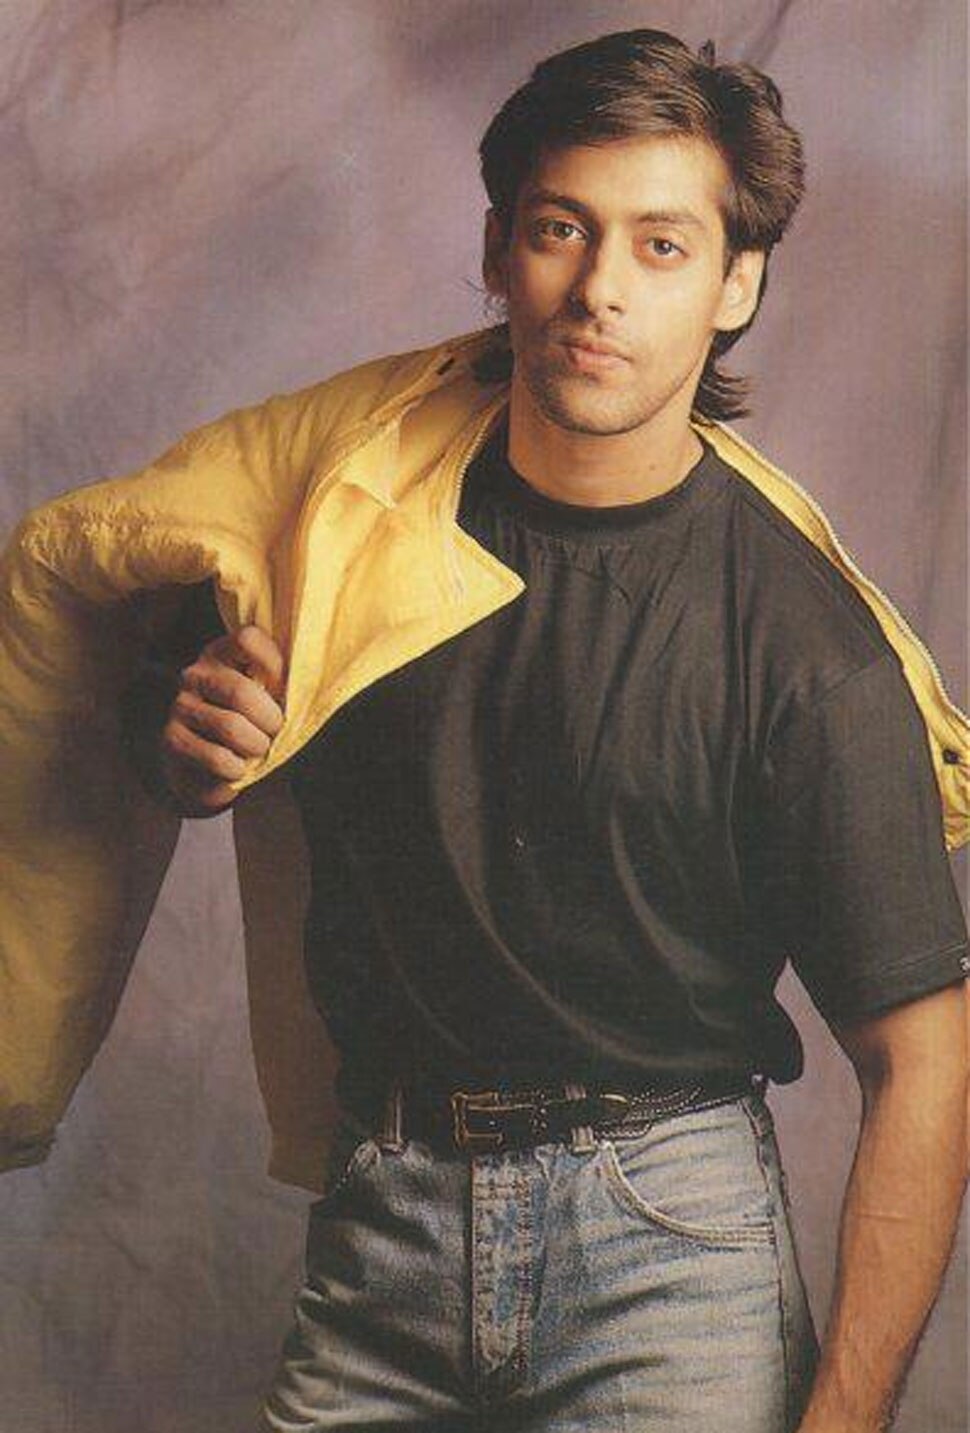 These 10 films of Salman Khan not released कभी रिलीज ही नहीं हो पाई